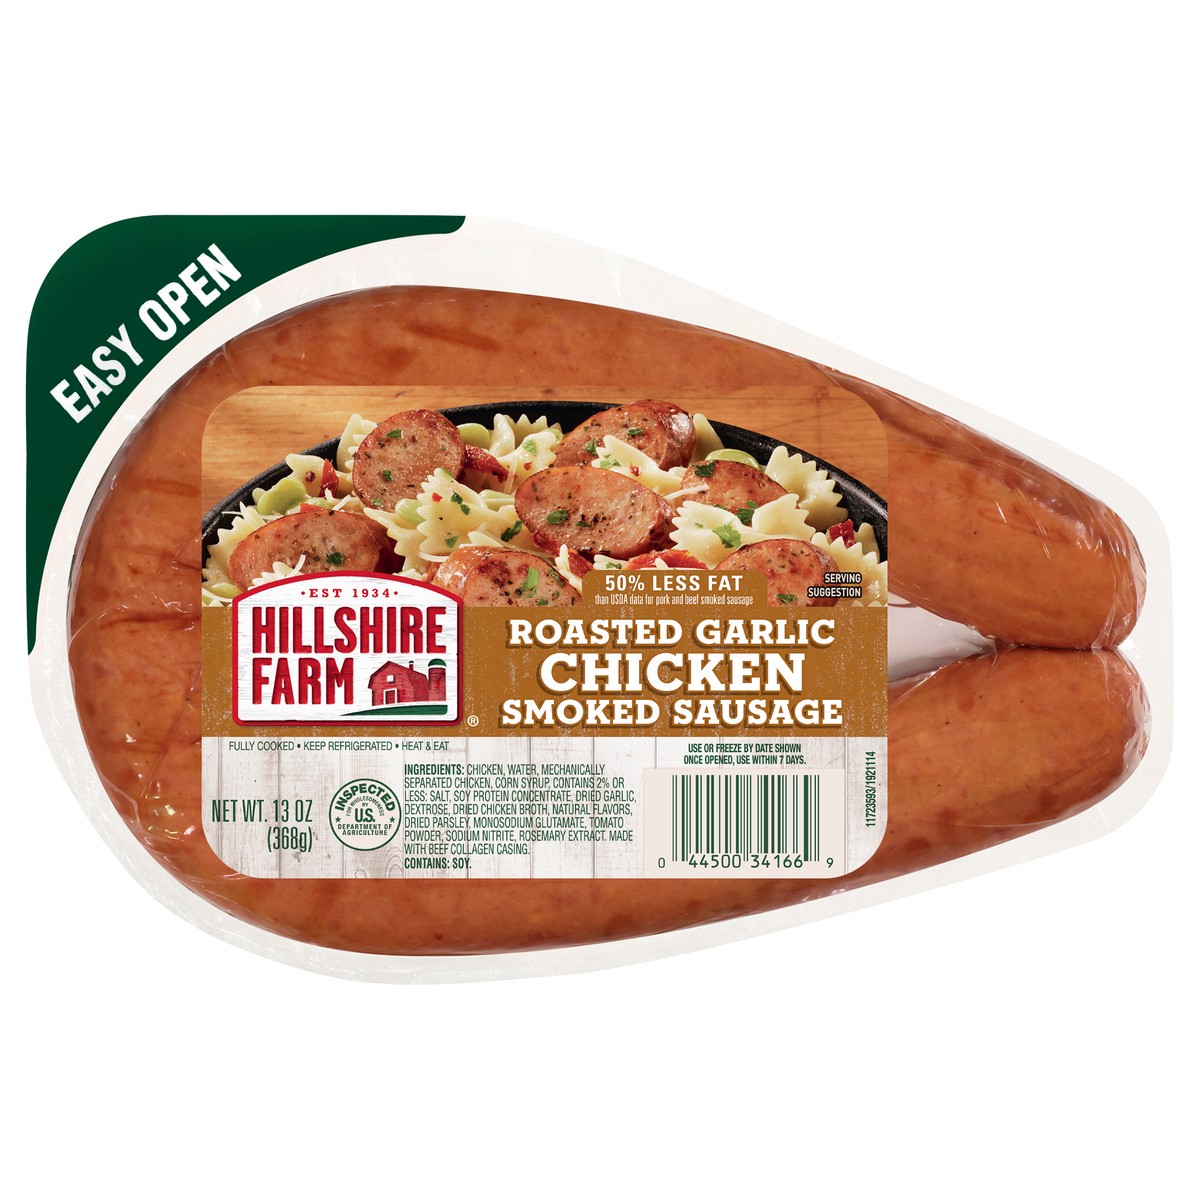 slide 1 of 7, Hillshire Farm Chicken Smoked Sausage, Roasted Garlic, 13 oz., 368.54 g